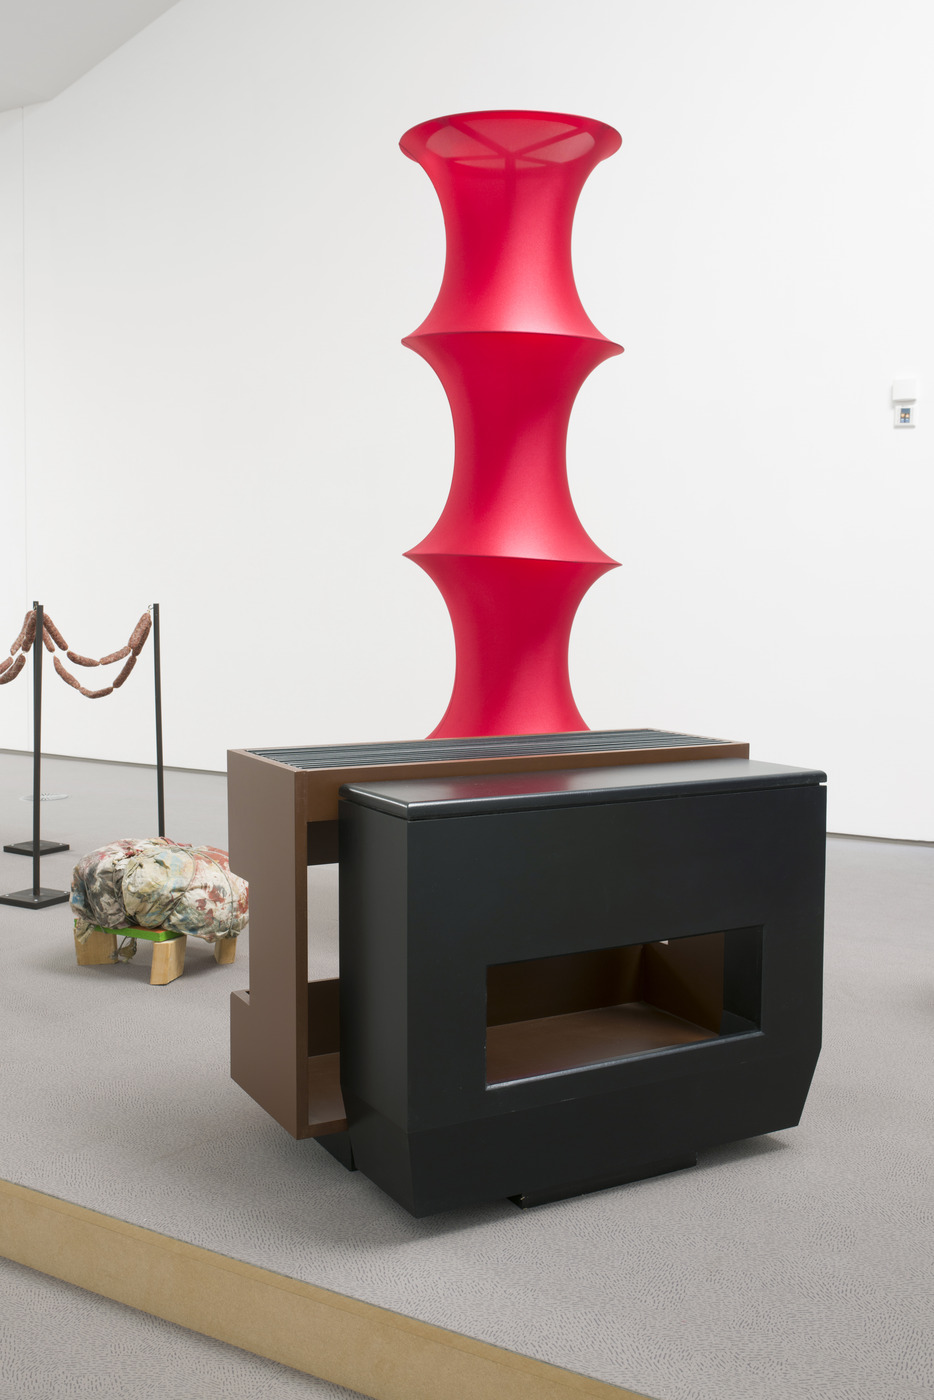 Furniture.Sculpture., Art Center Hugo Voeten, May 2016_09